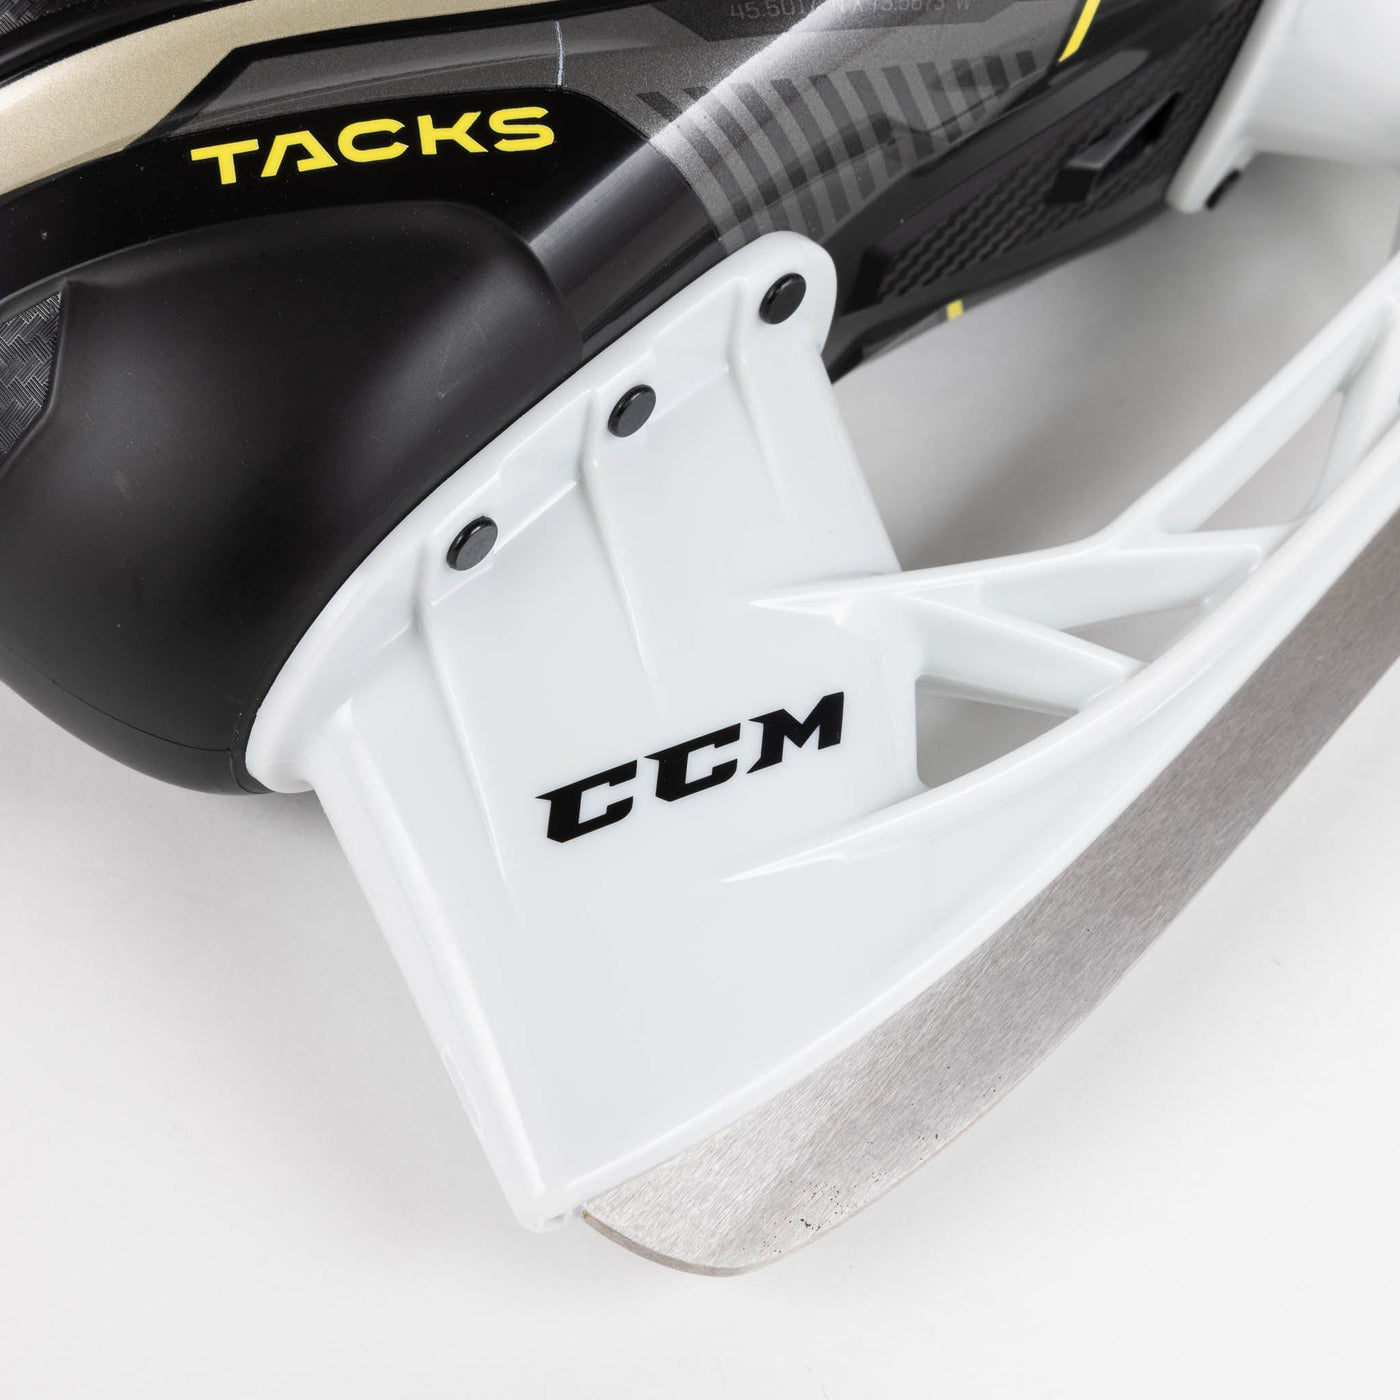 CCM Tacks AS560 Intermediate Hockey Skates - The Hockey Shop Source For Sports